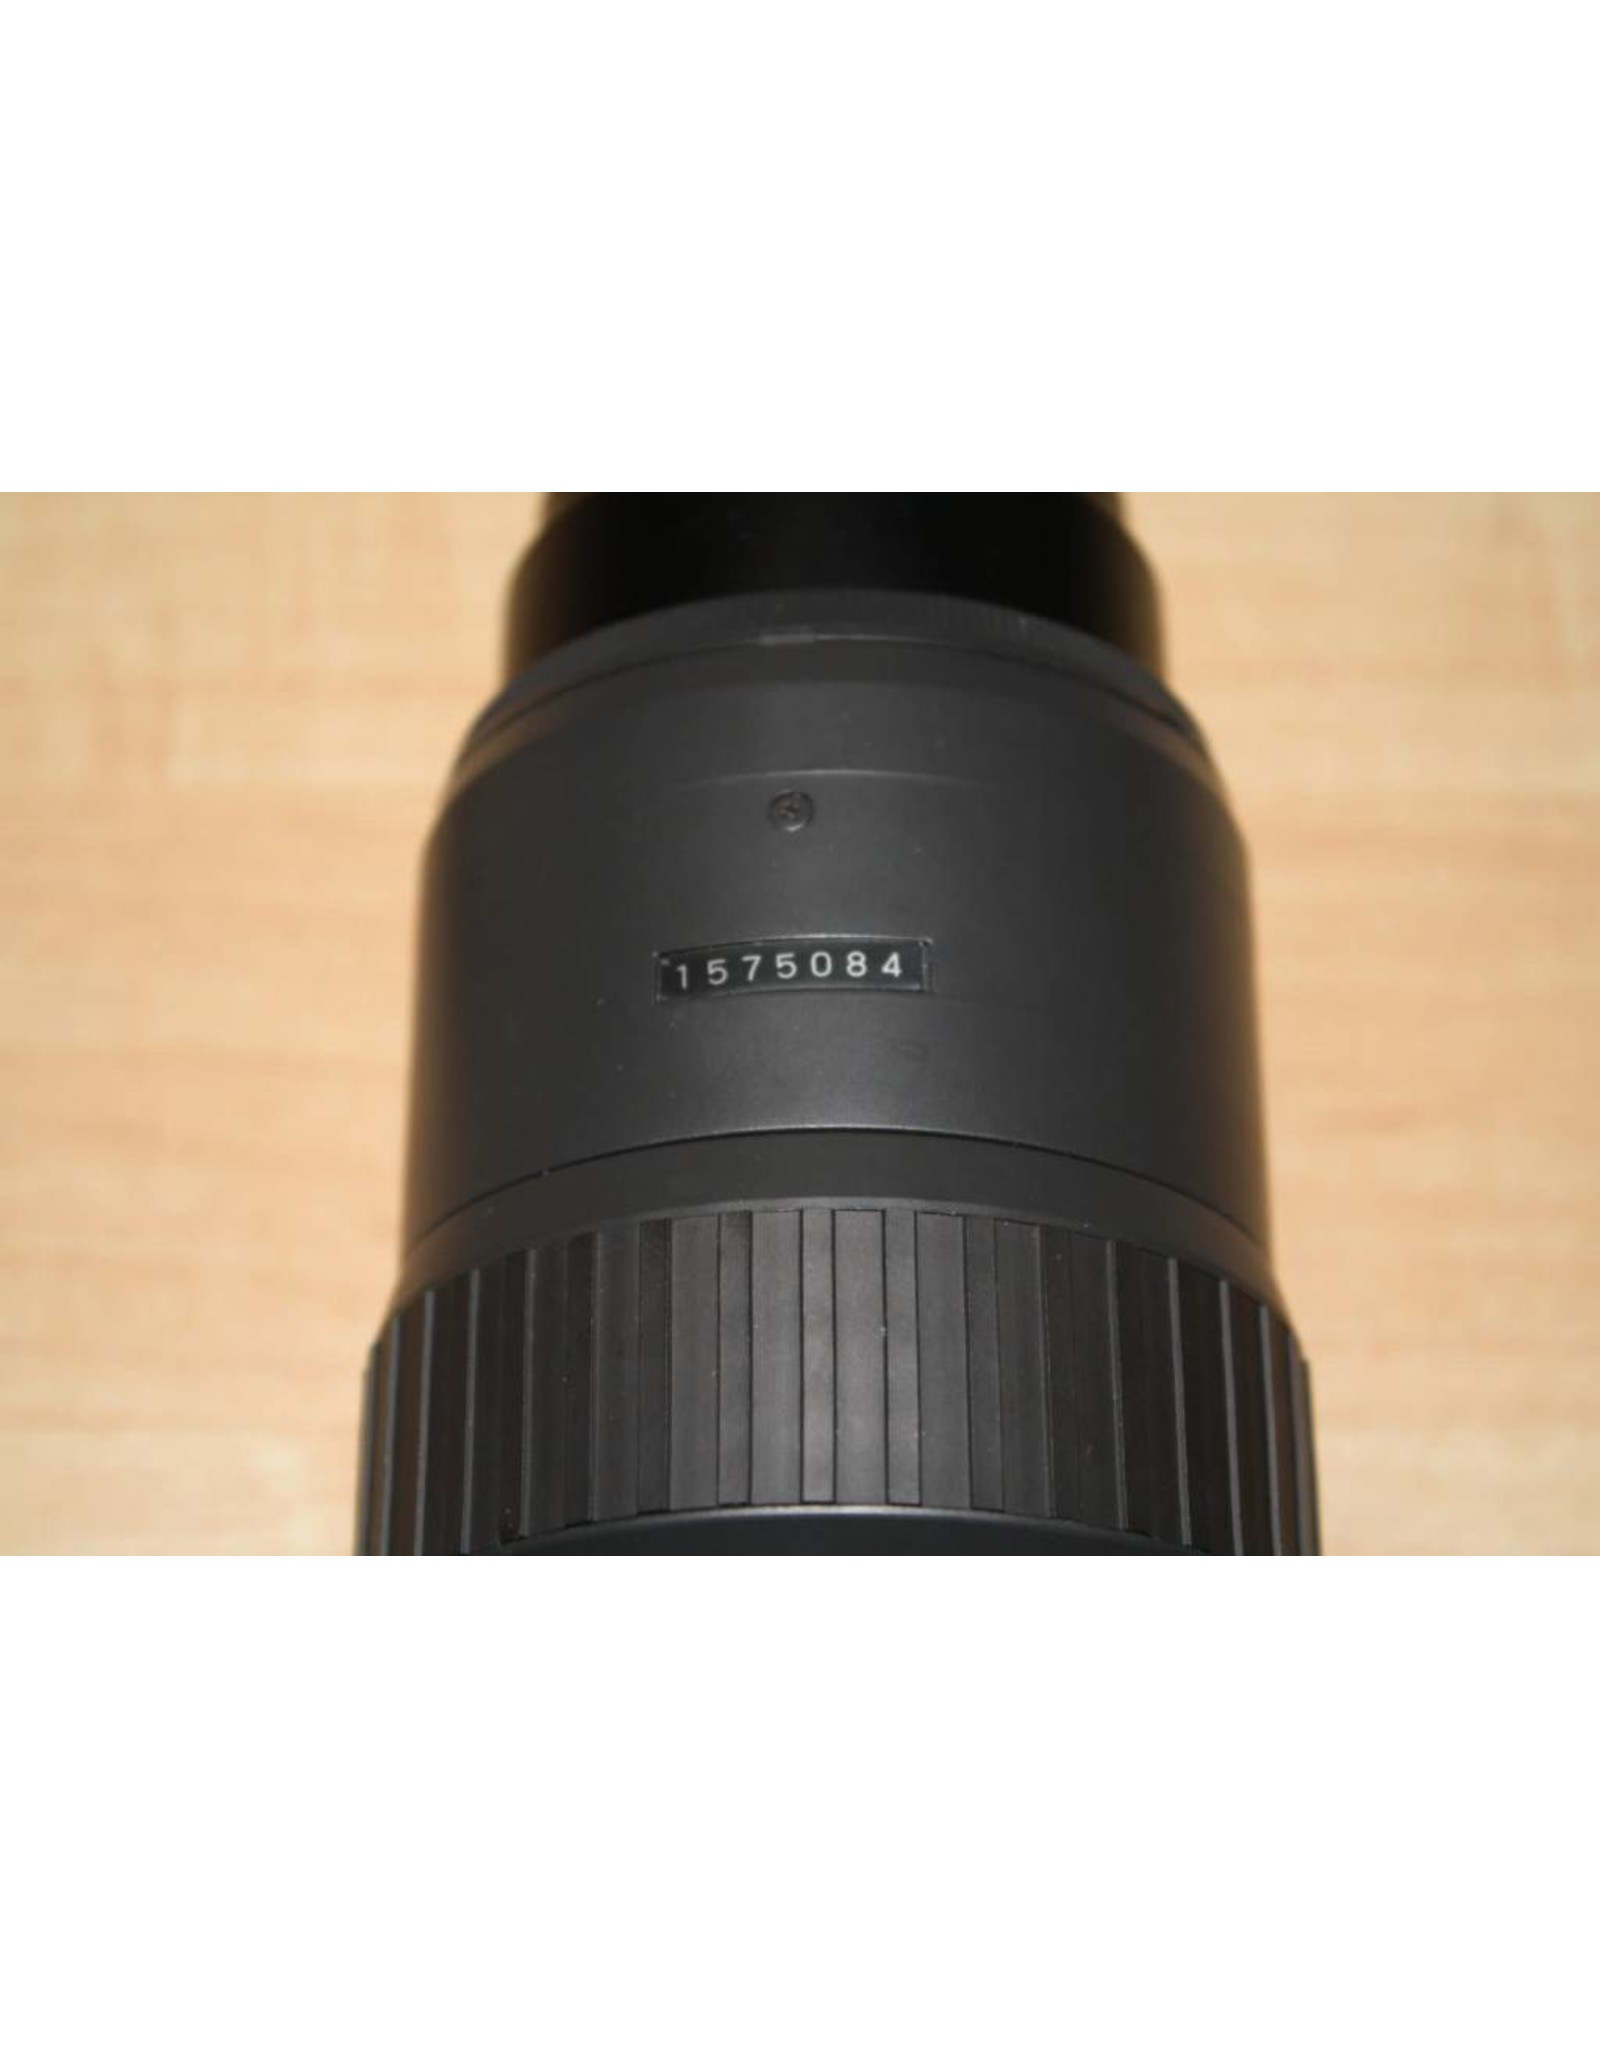 Pentax Takumar-F 70-200mm Zoom for Digital/Film (Pre-owned)